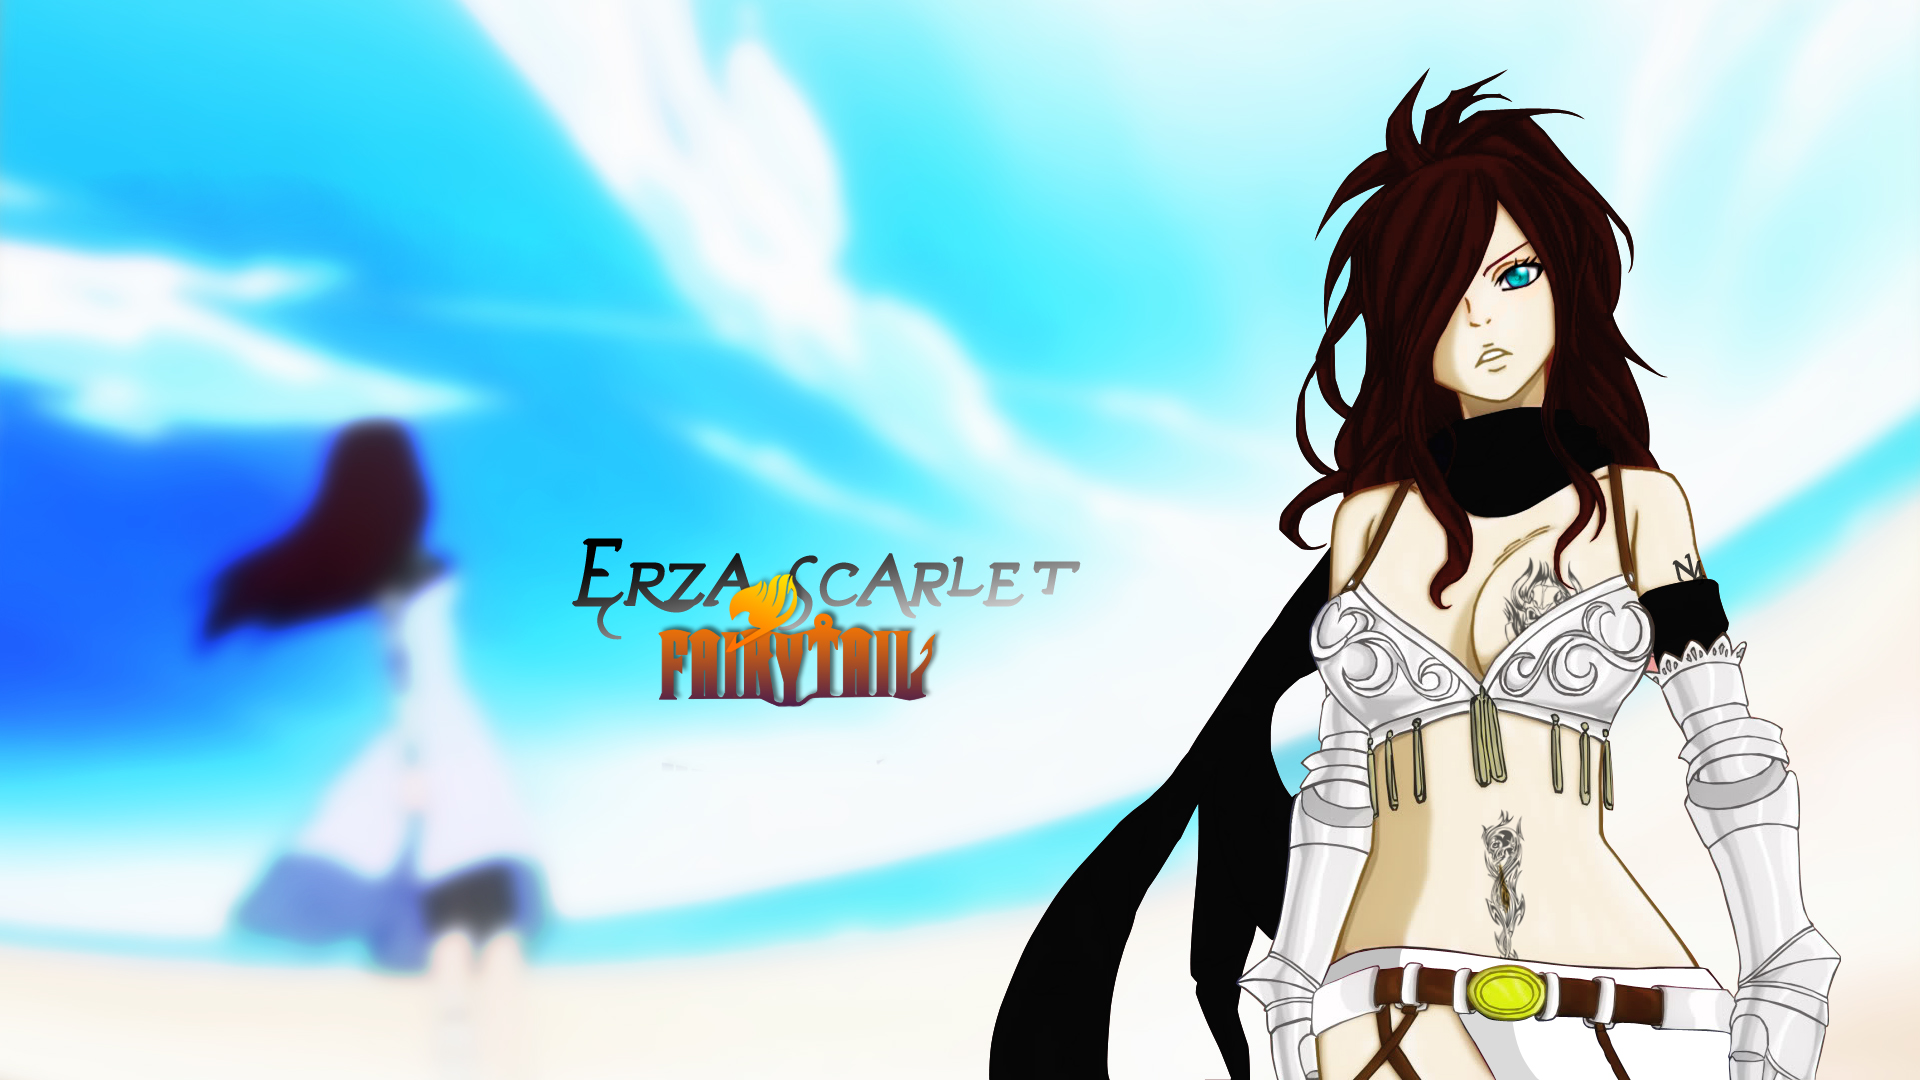 Fond d'ecran Erza Scarlet Fairy tail